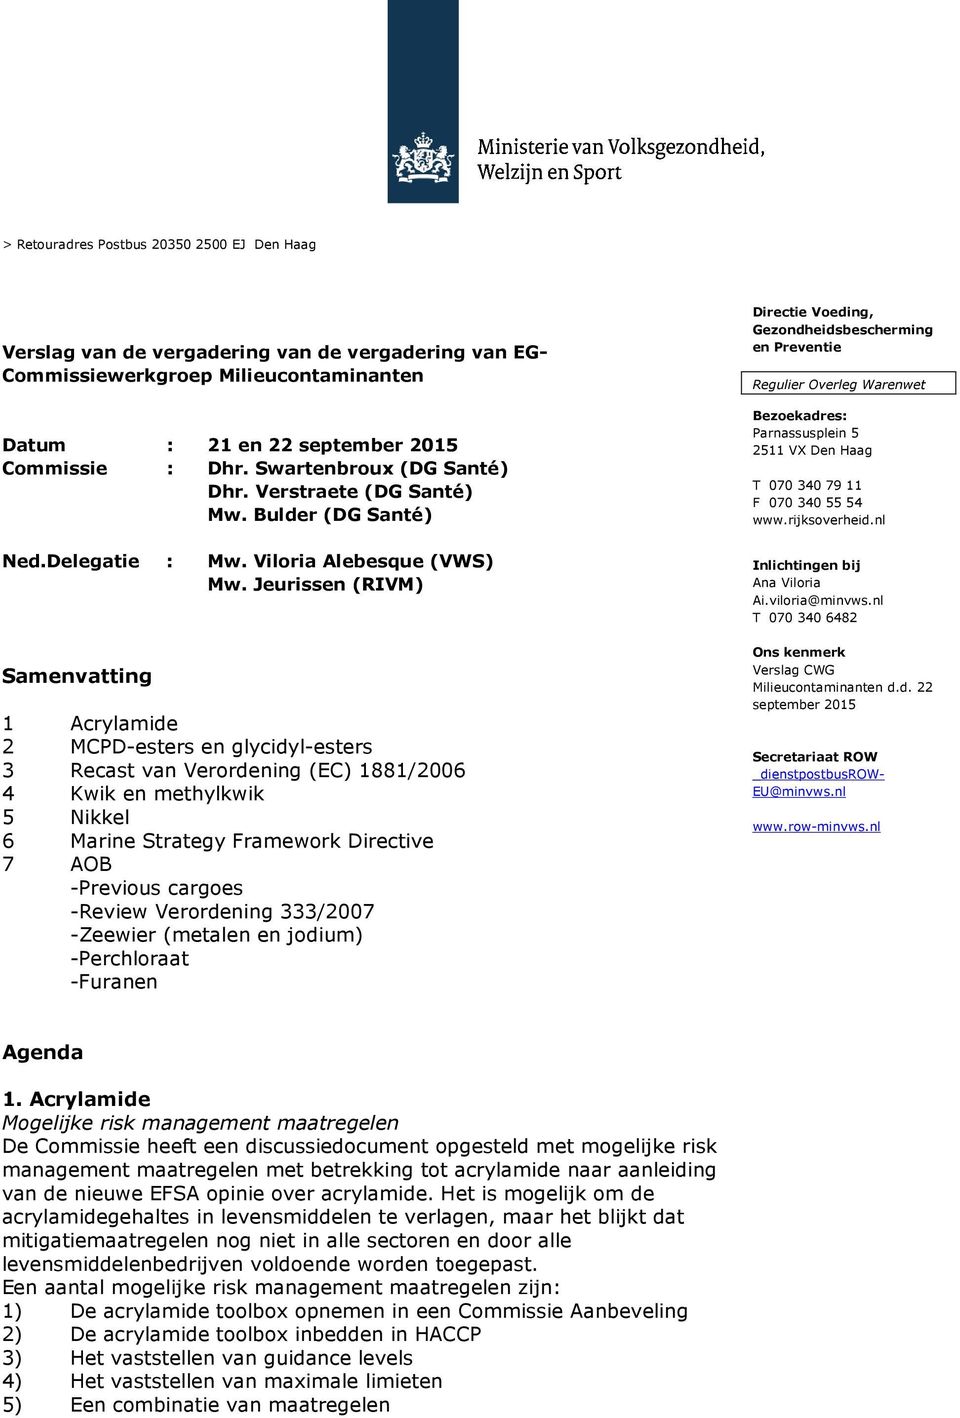 Jeurissen (RIVM) Samenvatting 1 Acrylamide 2 MCPD-esters en glycidyl-esters 3 Recast van Verordening (EC) 1881/2006 4 Kwik en methylkwik 5 Nikkel 6 Marine Strategy Framework Directive 7 AOB -Previous